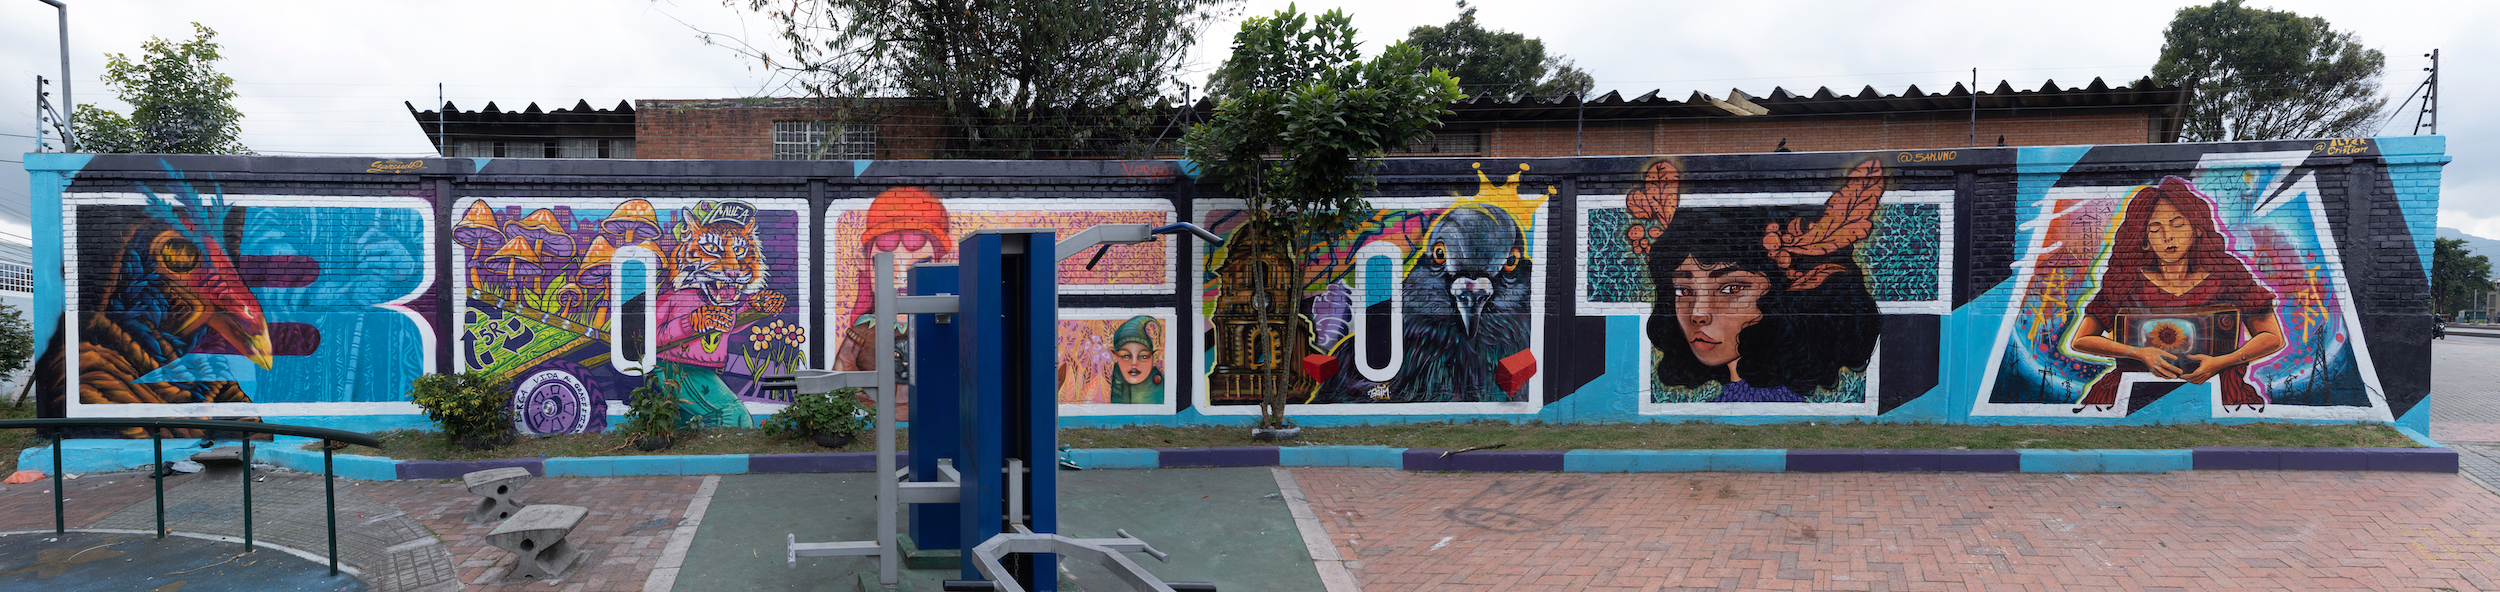 Obra Bogotá de varios artistas